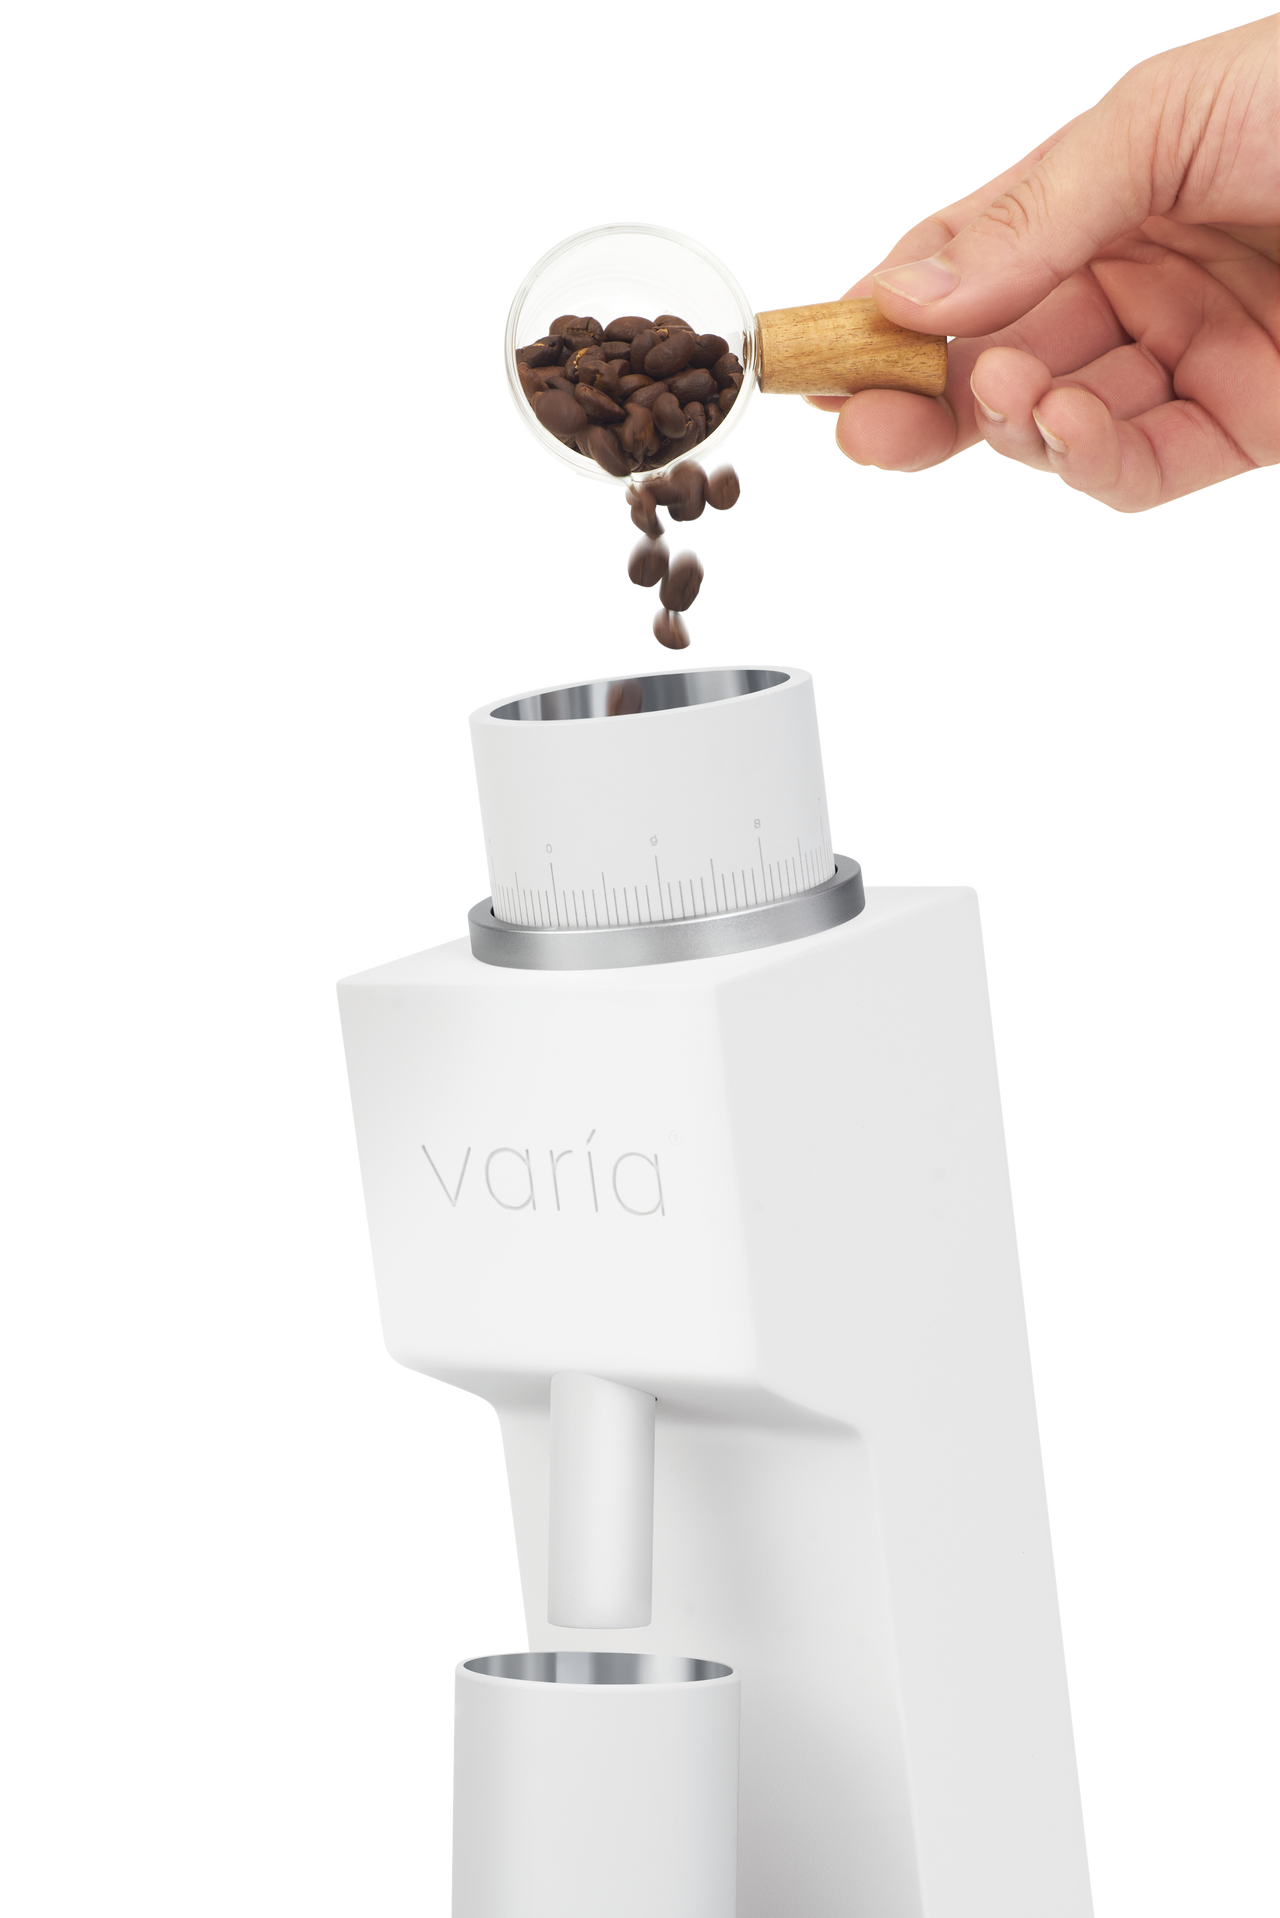 Varia V3 - 2nd Generation - Weiss - Coffee Coaching Club